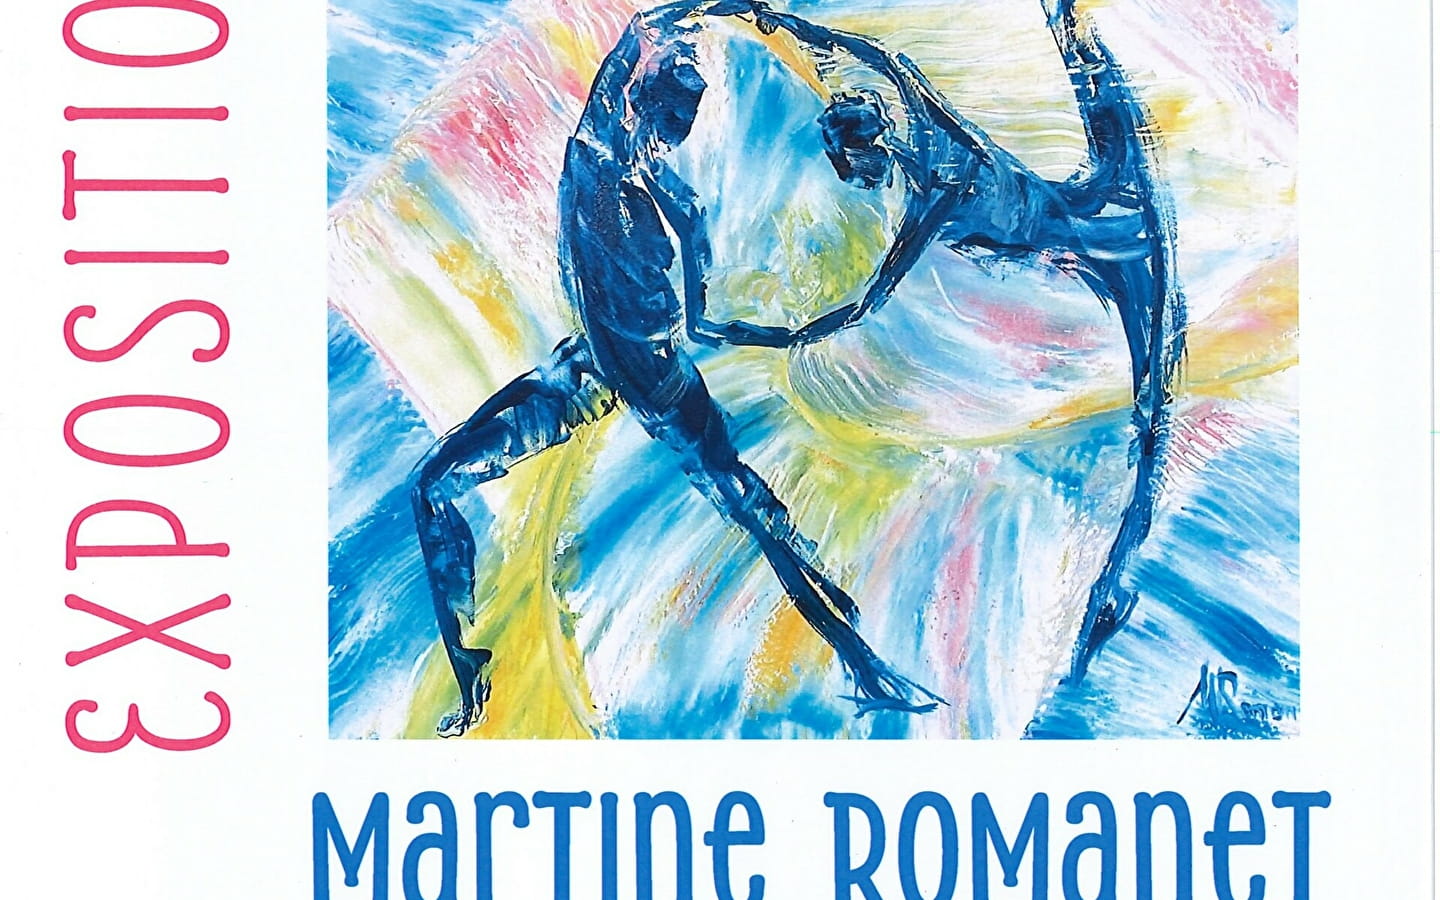 Tentoonstelling: Martine Romanet in het MIA